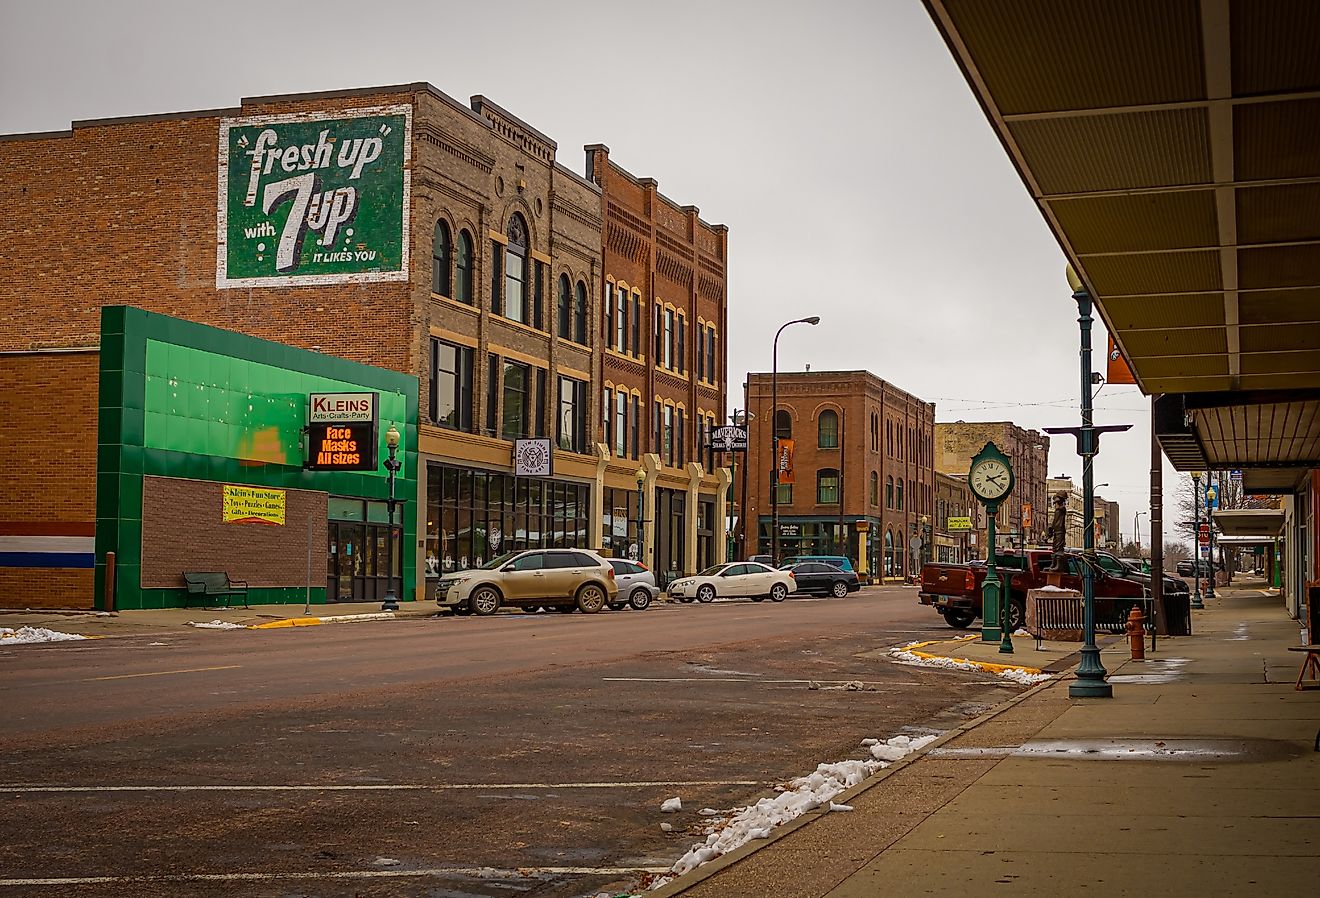 The historic downtown, Watertown, South Dakota. Image credit Sabrina Janelle Gordon via Shutterstock